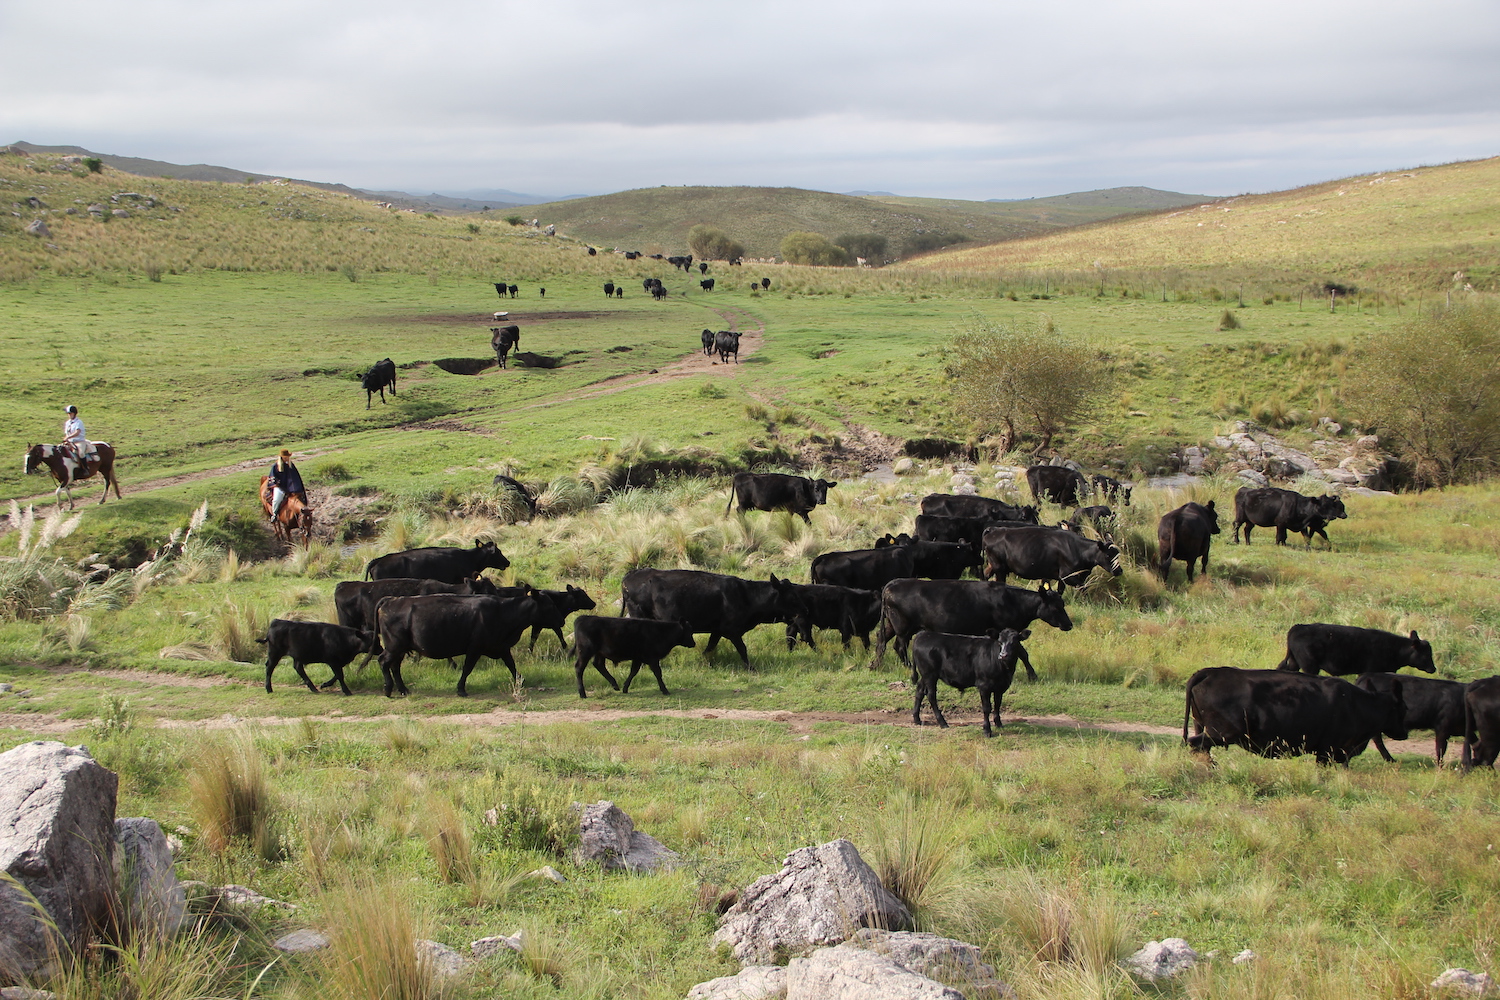 Gauchos herding the cattle at Los Potreros